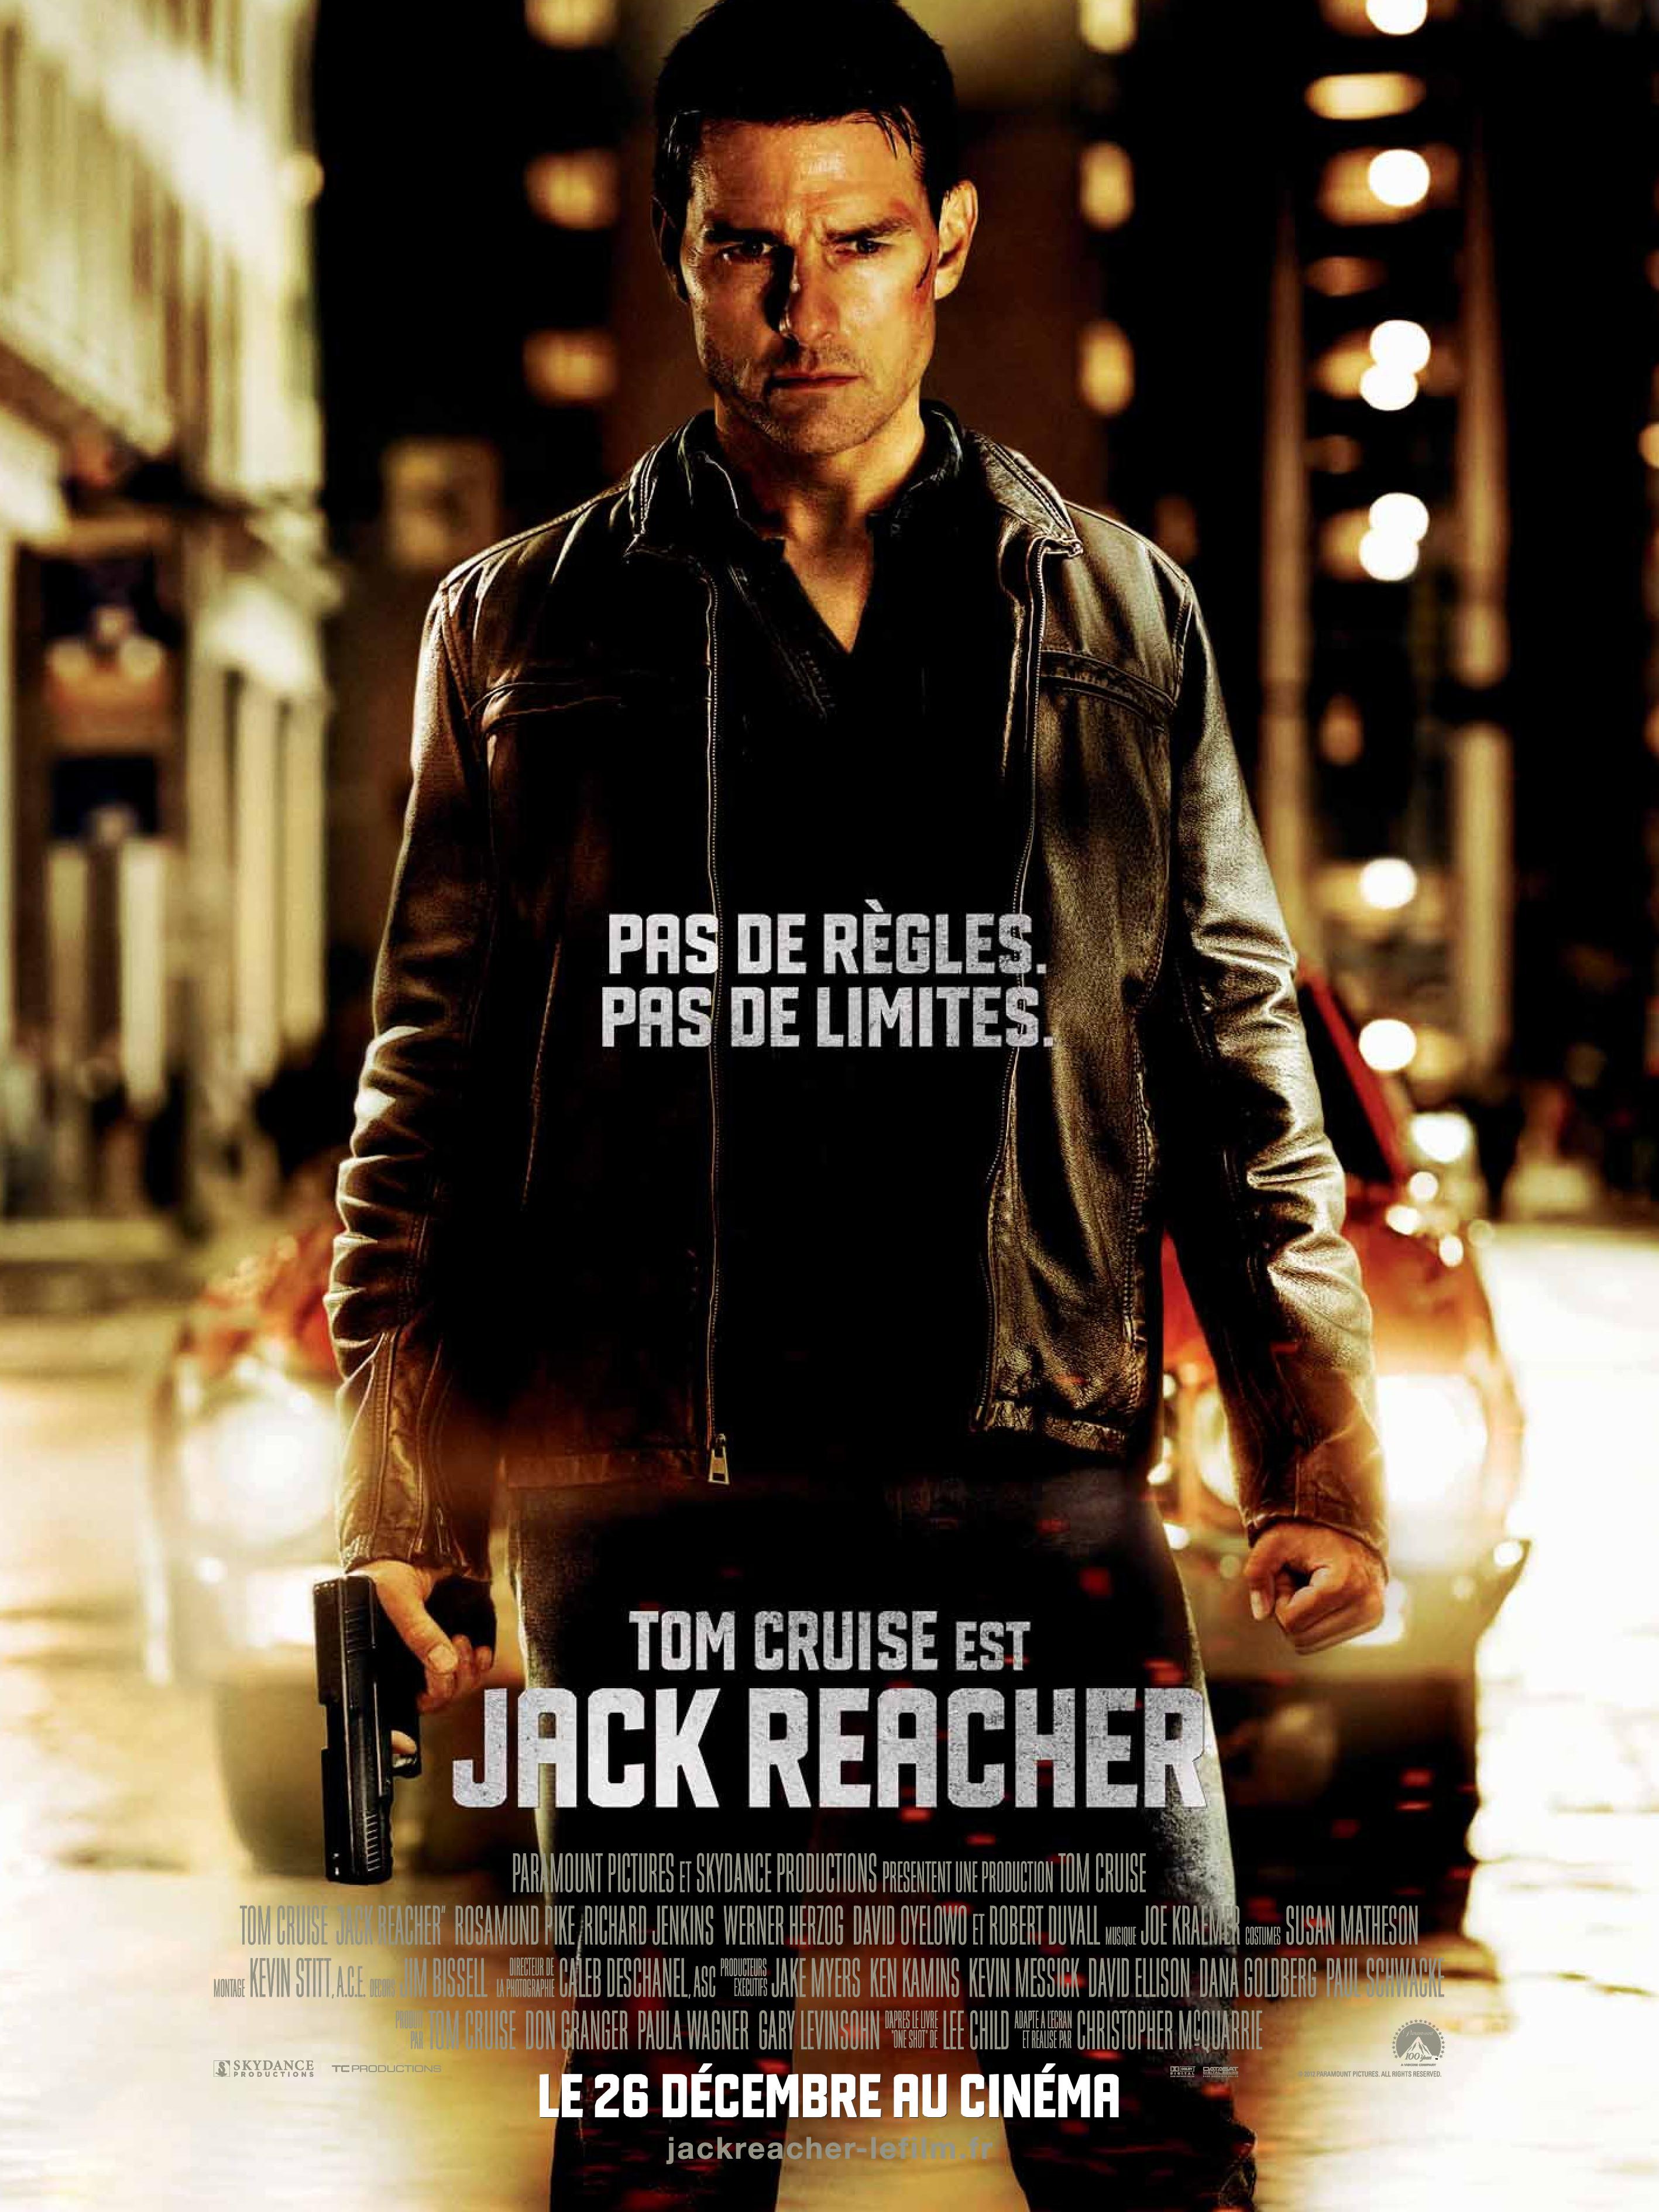 http://www.cinematon.fr/wp-content/uploads/2012/10/Affiche-Jack-Reacher.jpg